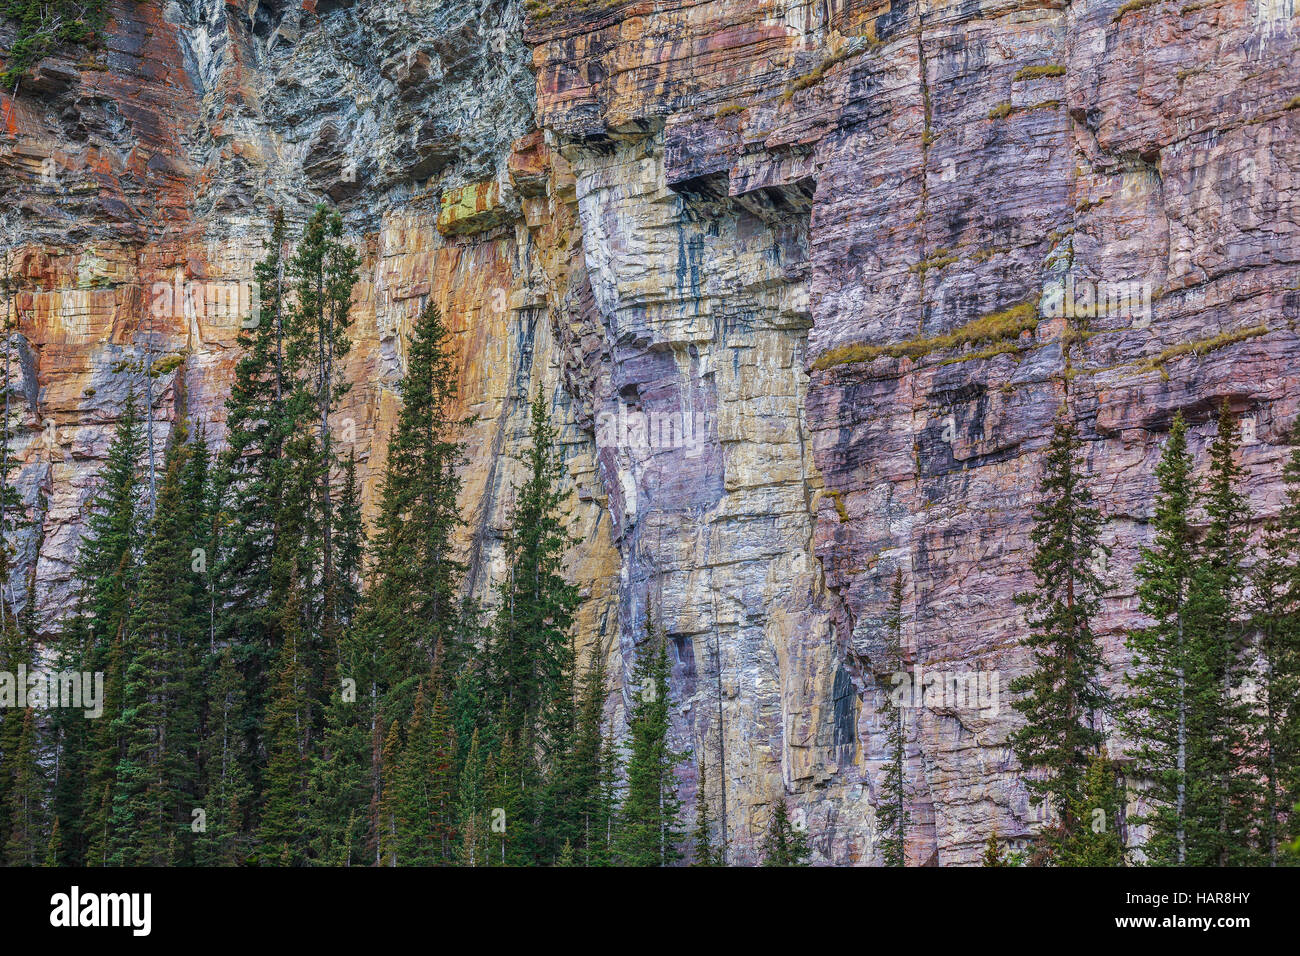 Klippen von Quarzit Felsen, Lake Louise, Banff Nationalpark, Alberta, Kanada. Stockfoto